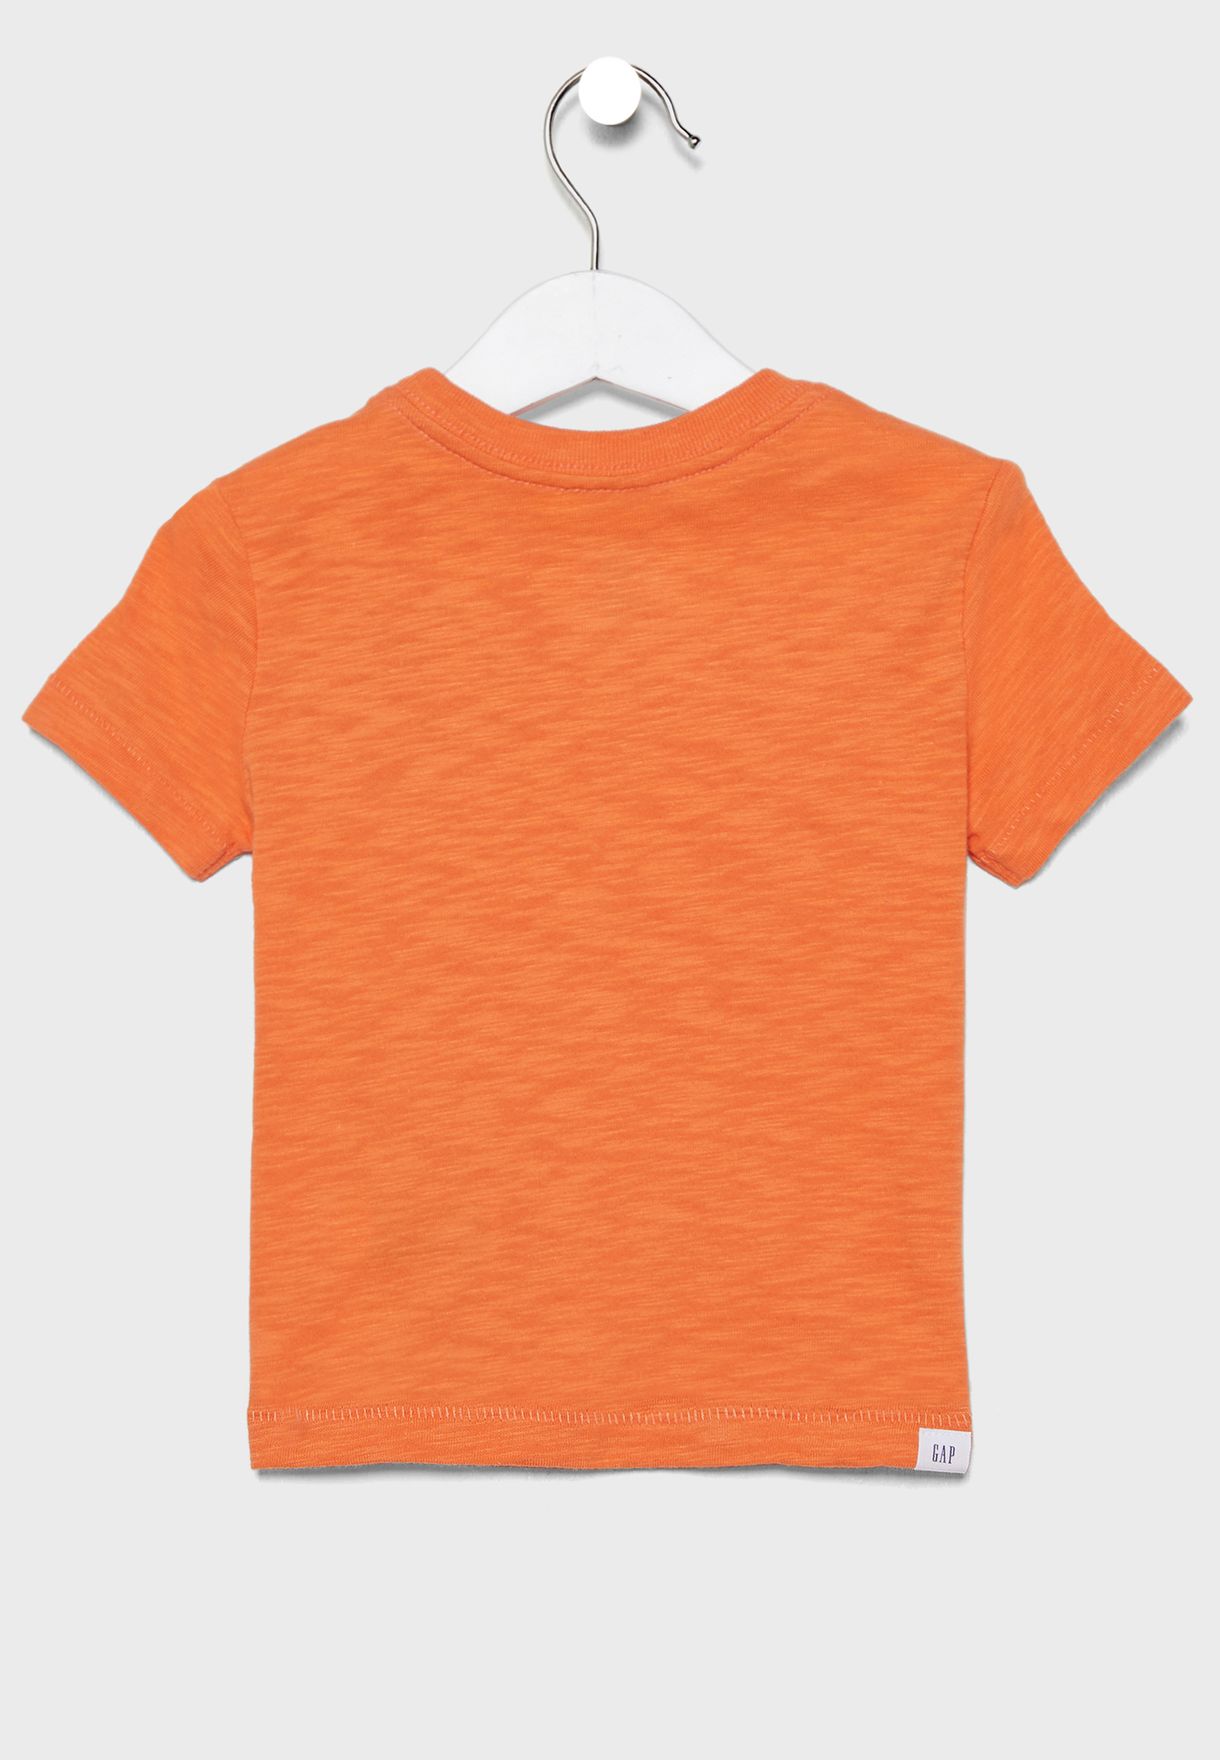 skechers t shirt kids orange